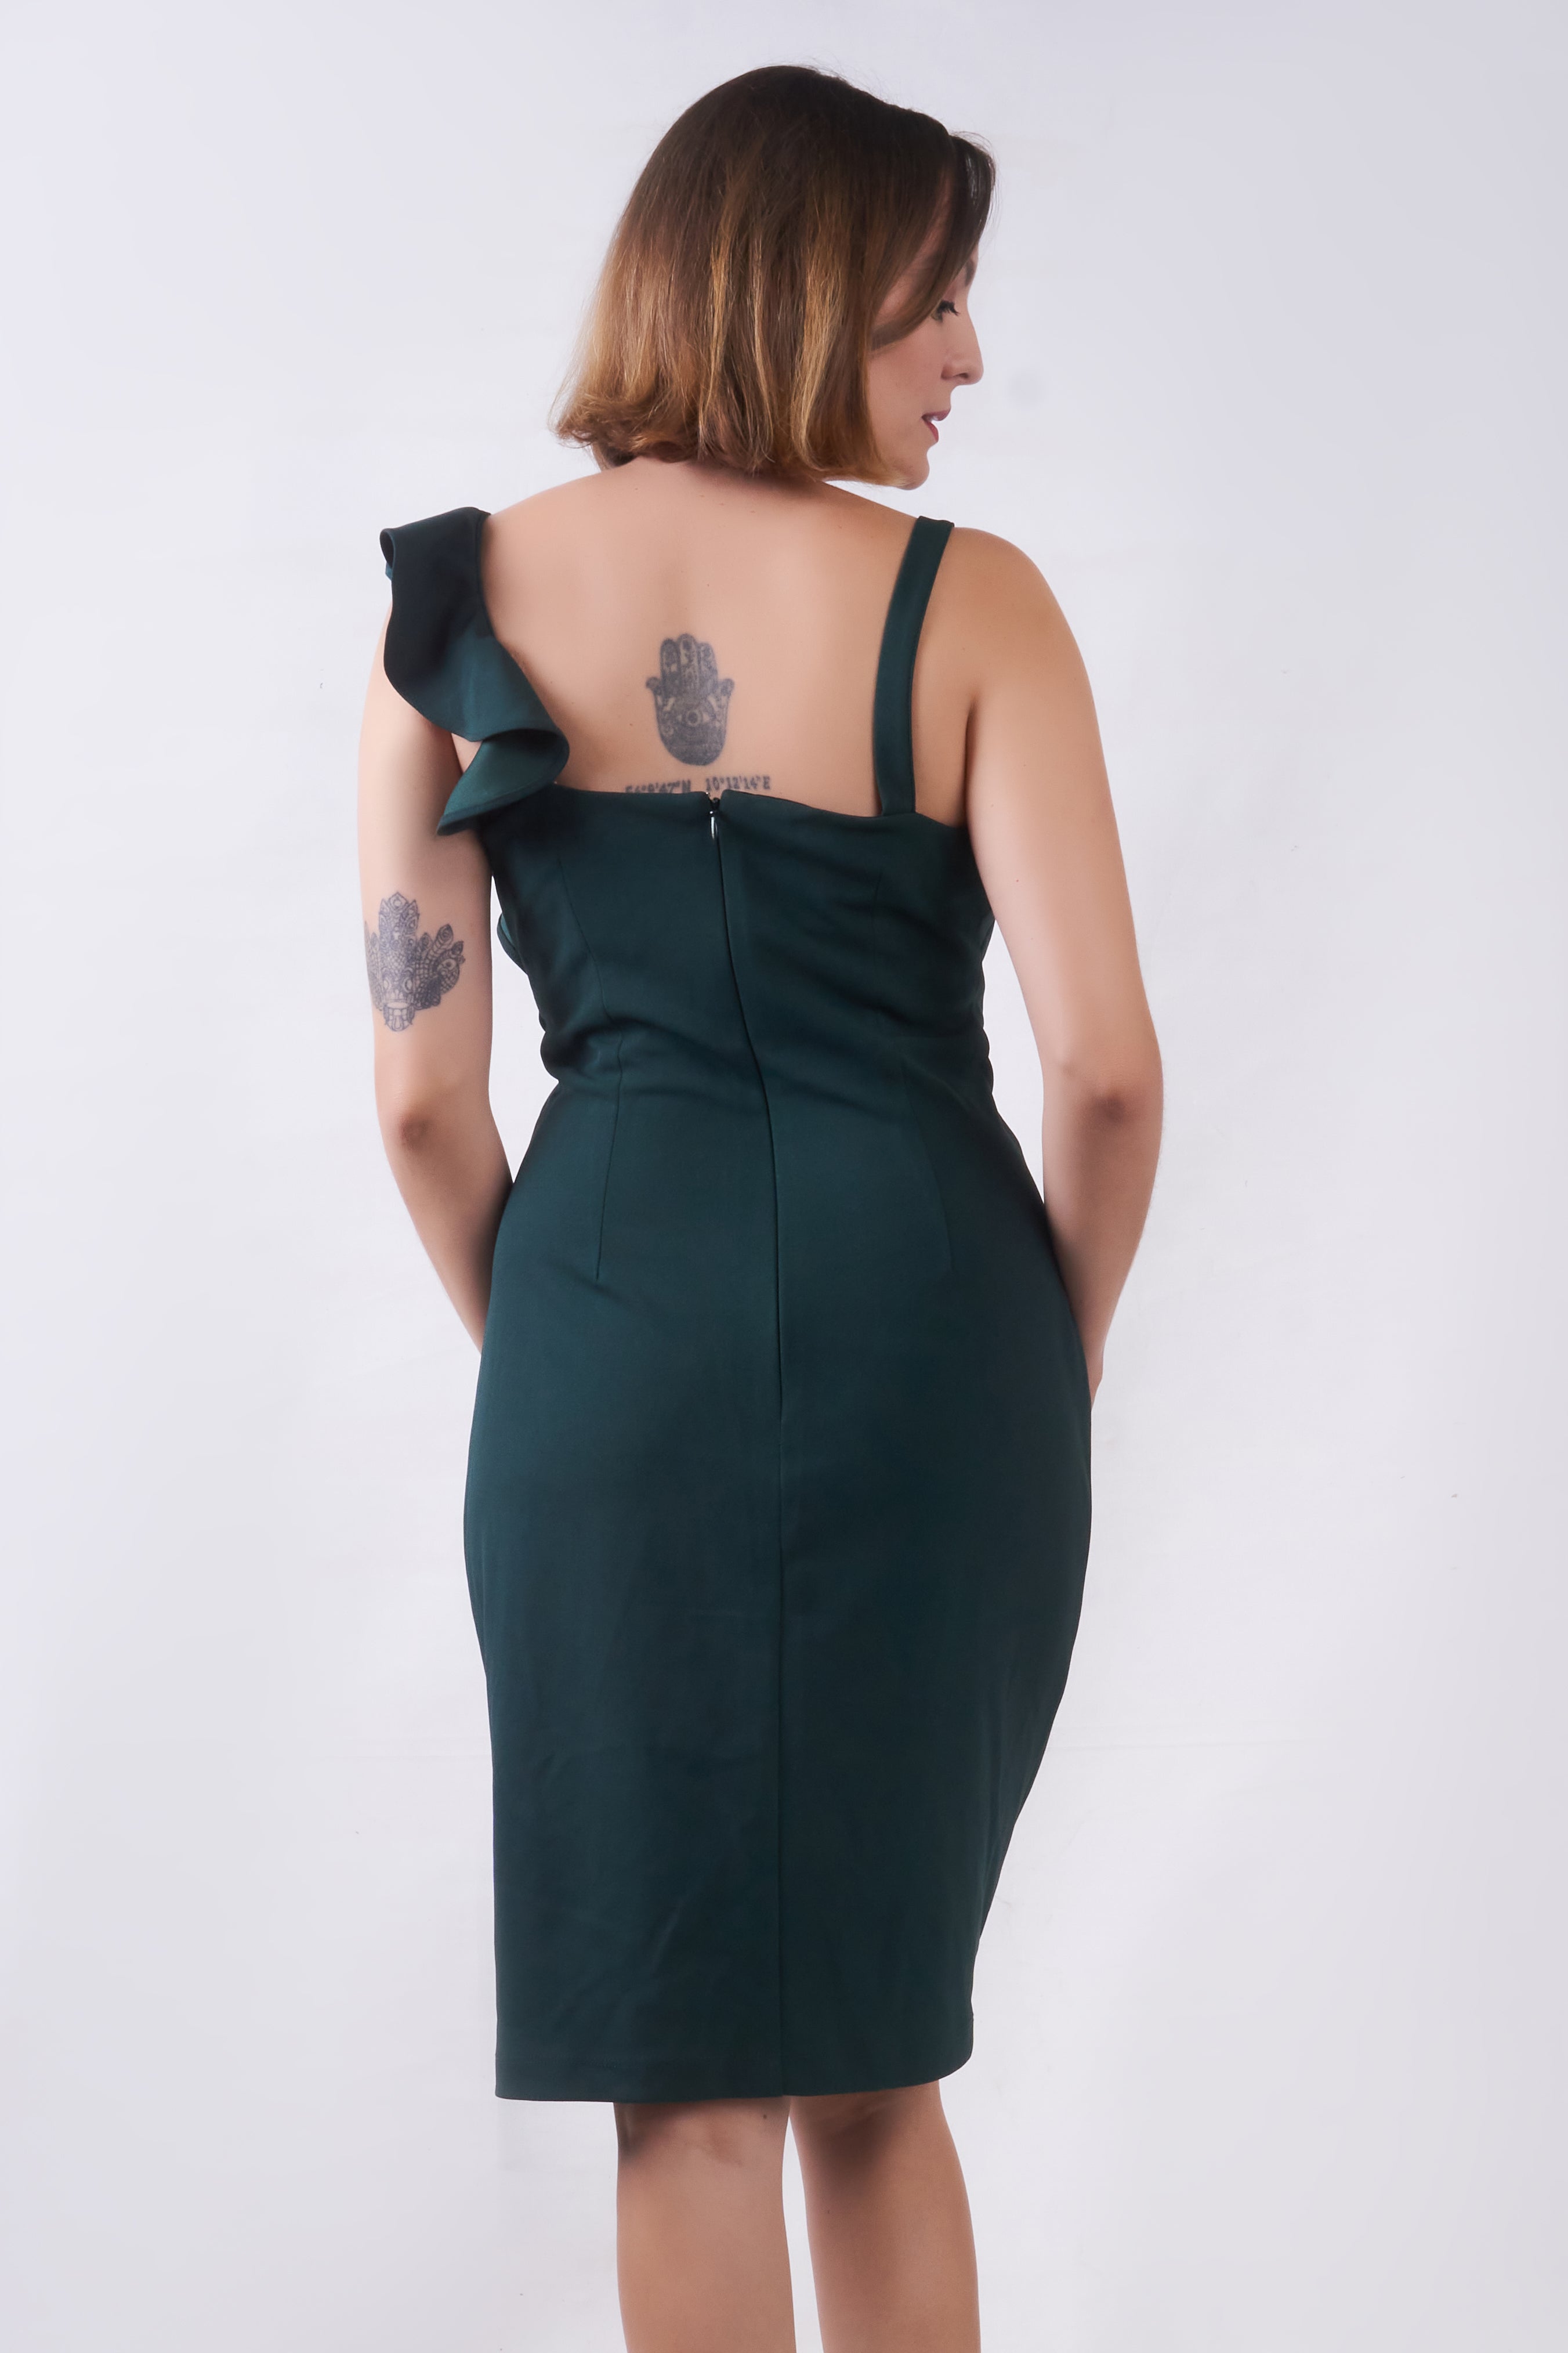 Brittany Ruffel Dress - Avirate Sri Lanka